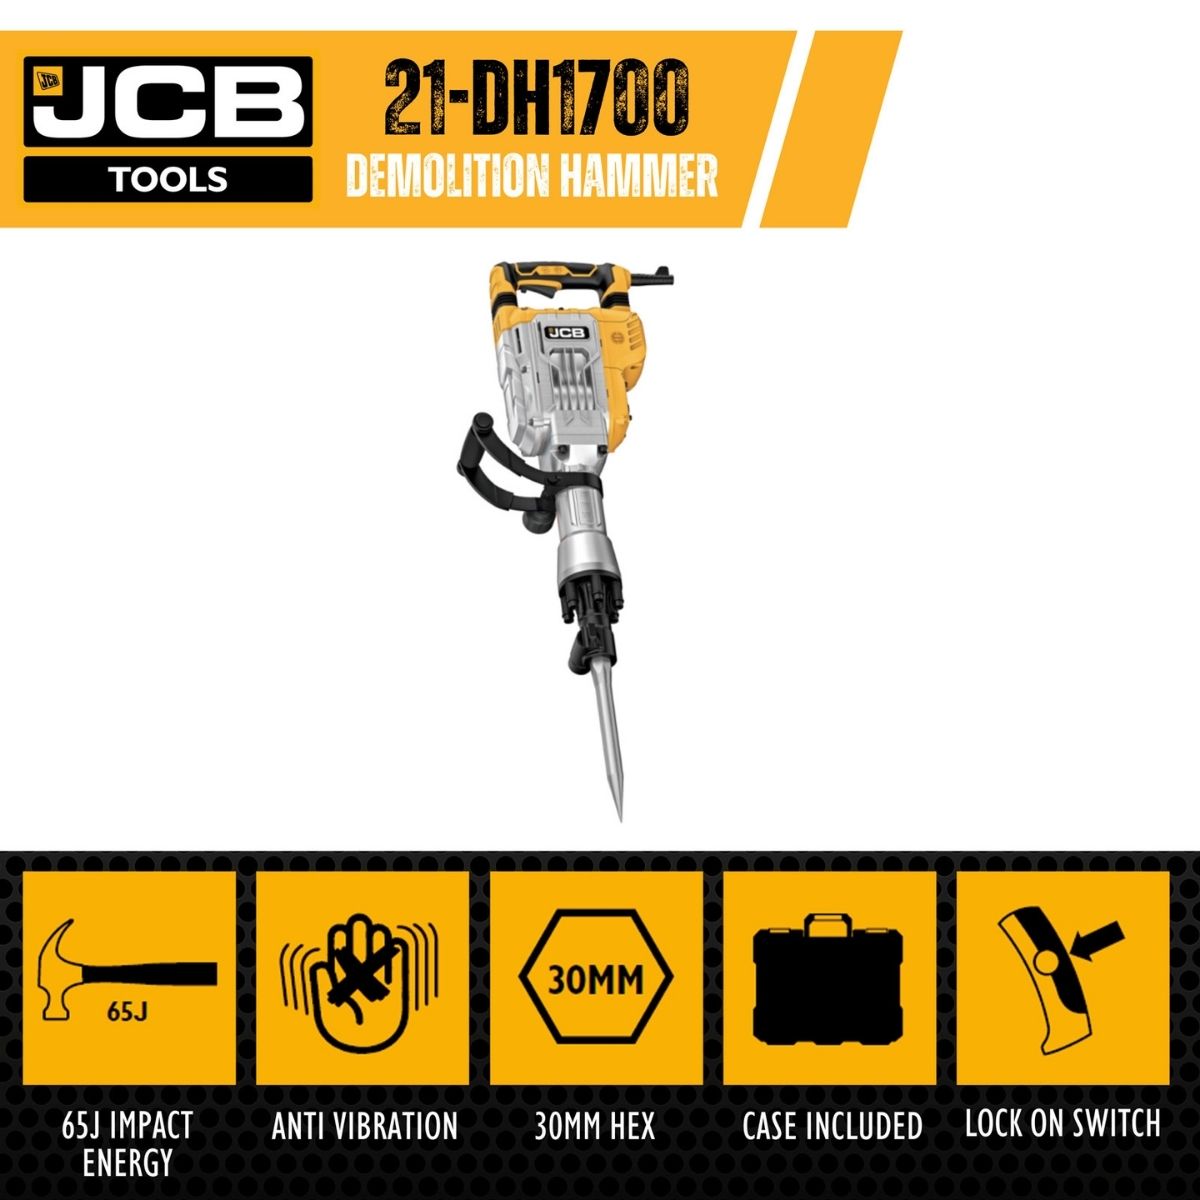 JCB 21-DH1700 30mm HEX Demolition Hammer 240V/1700W